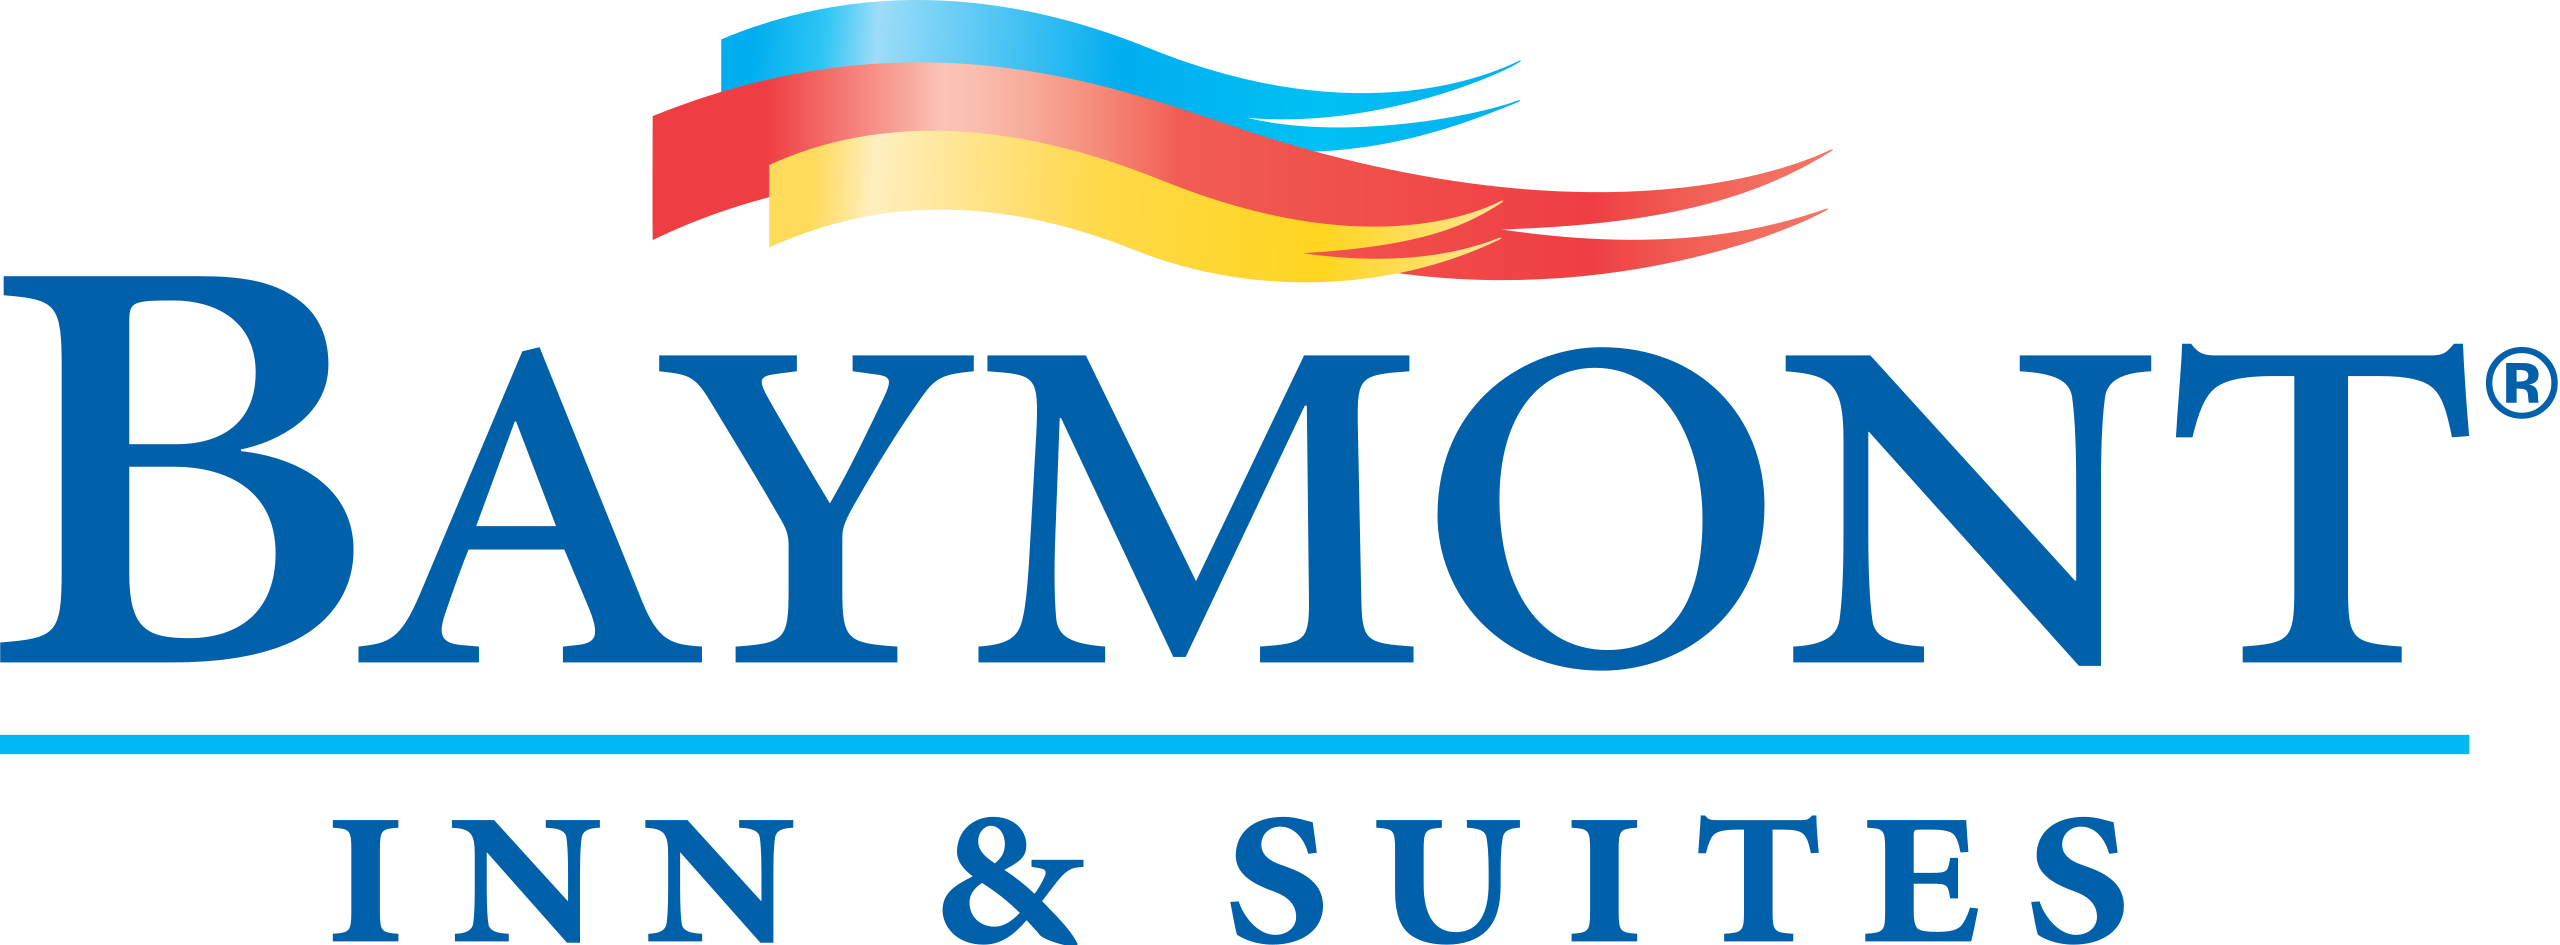 Baymont_Inn_&_Suites.svg